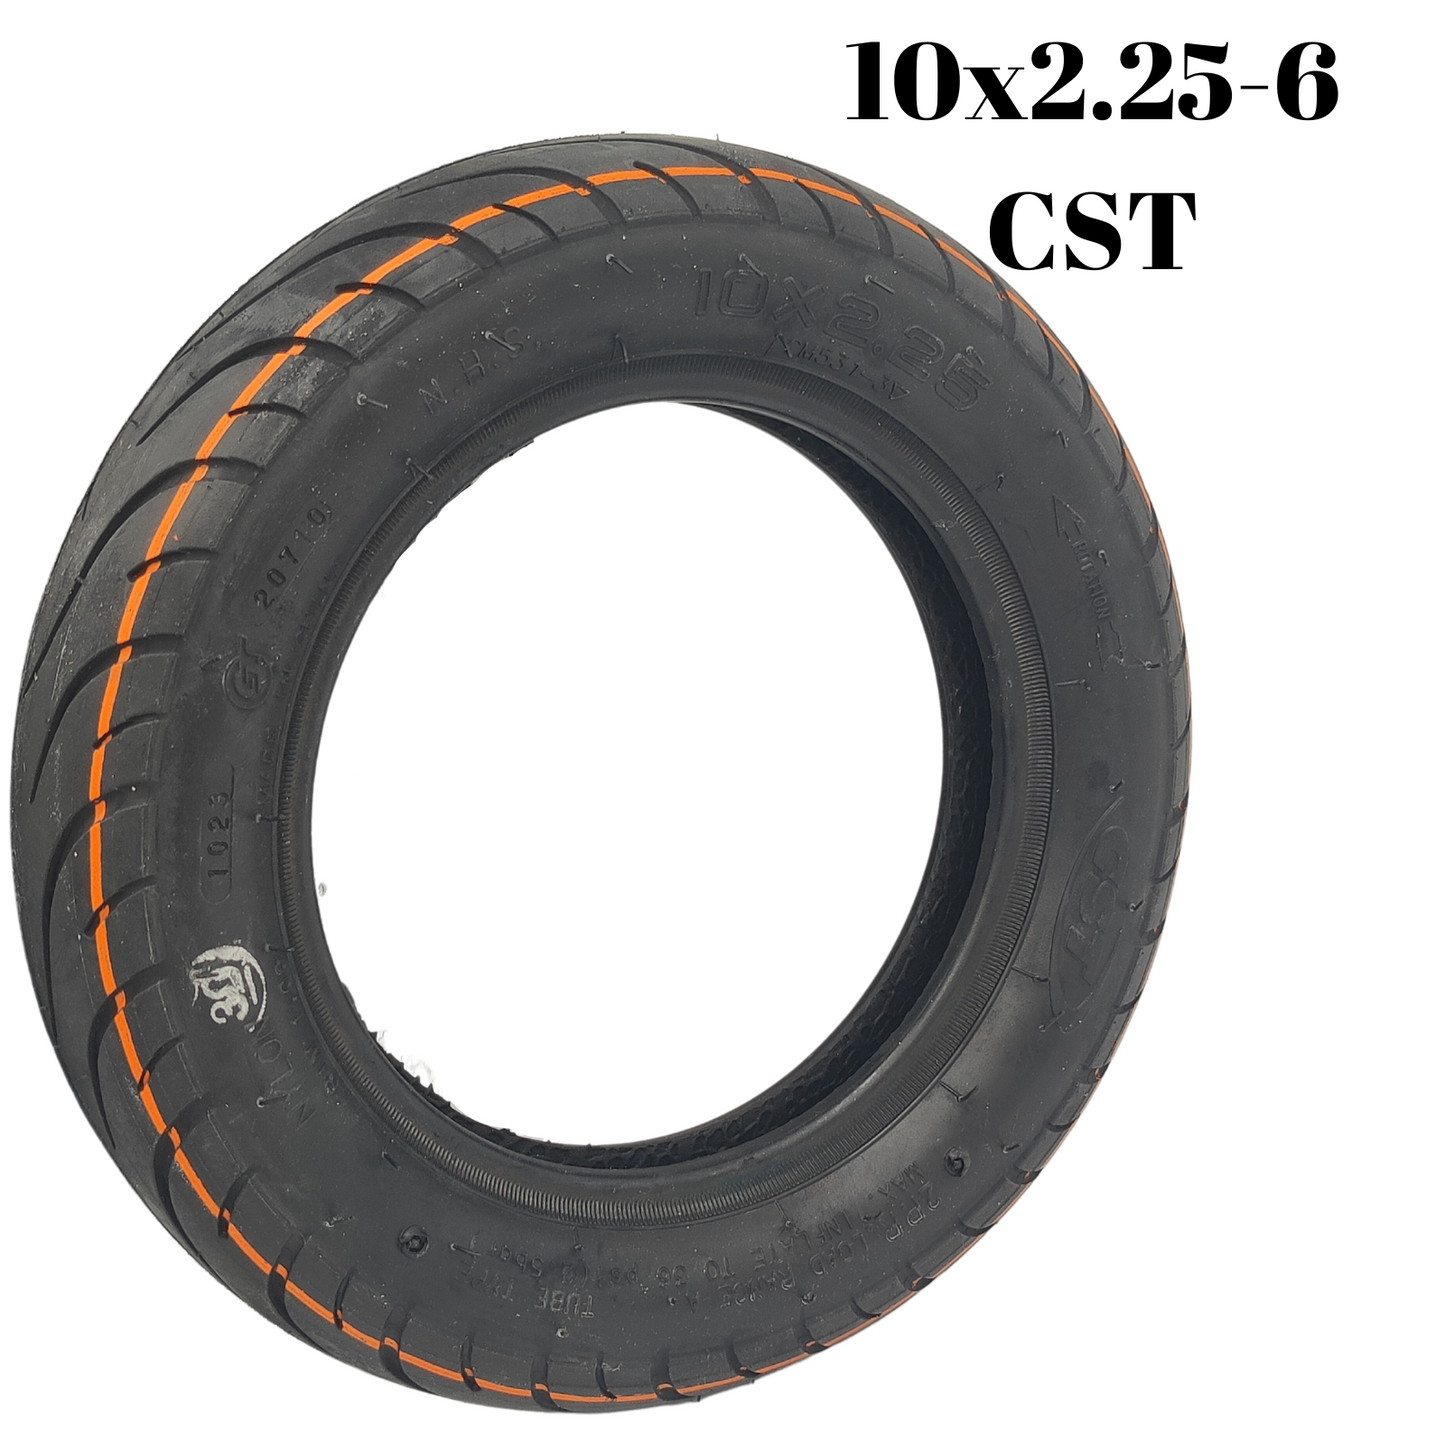 CST Reifen 10x2.25-6 Zoll für E-Scooter